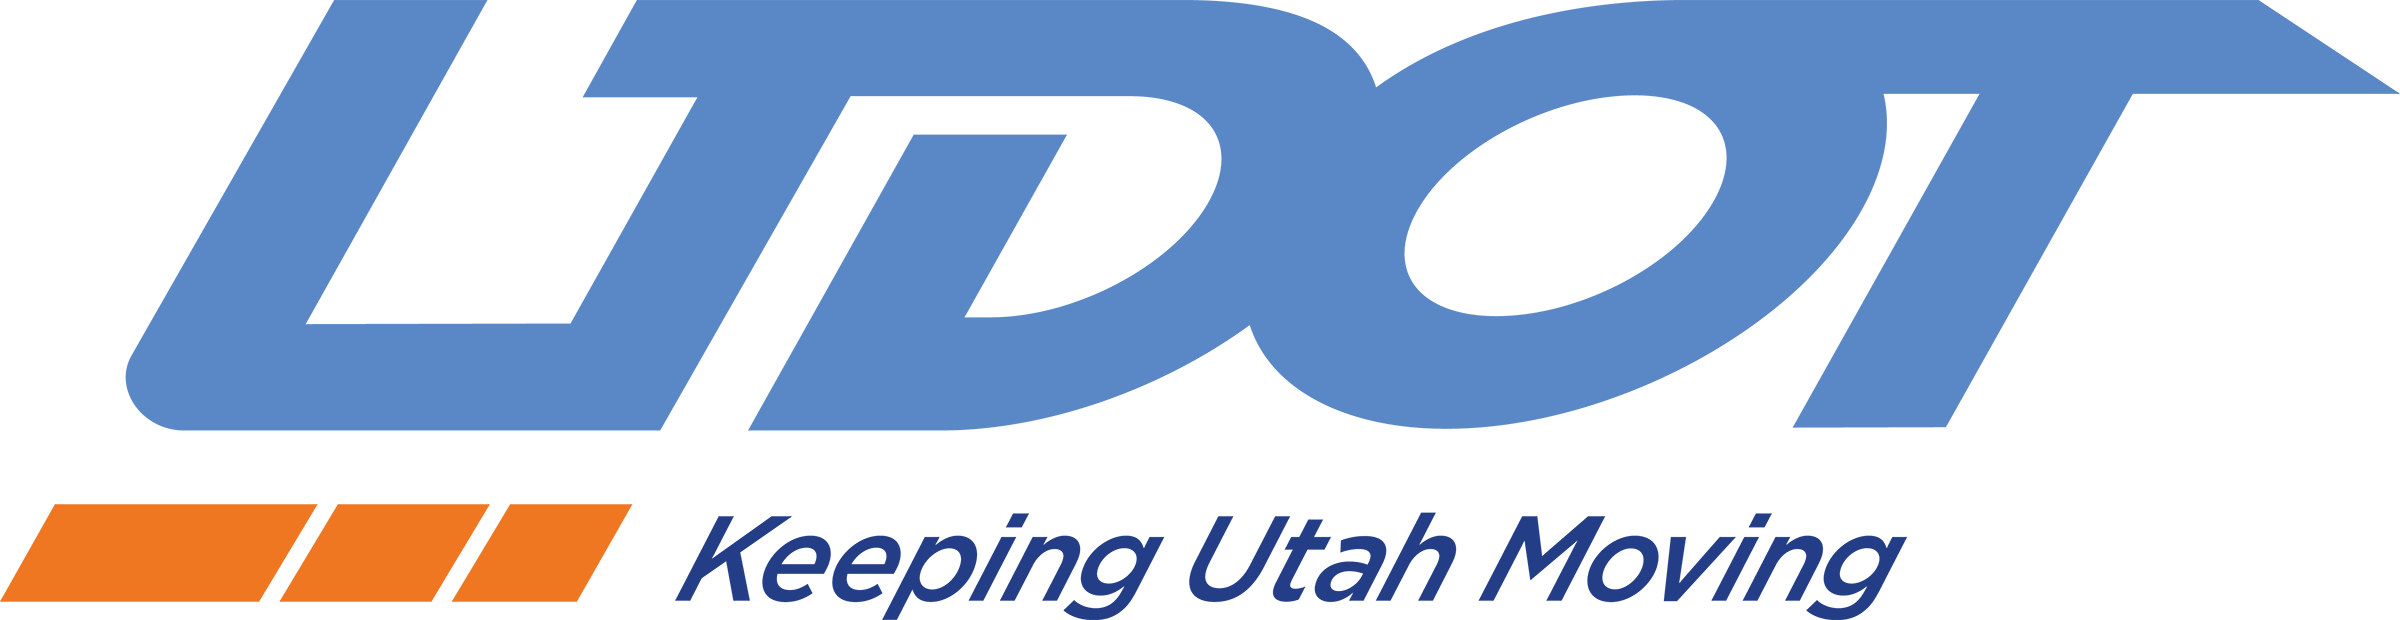 Utah DOT: Keeping Utah Moving. Utah Department of Transportation logo.